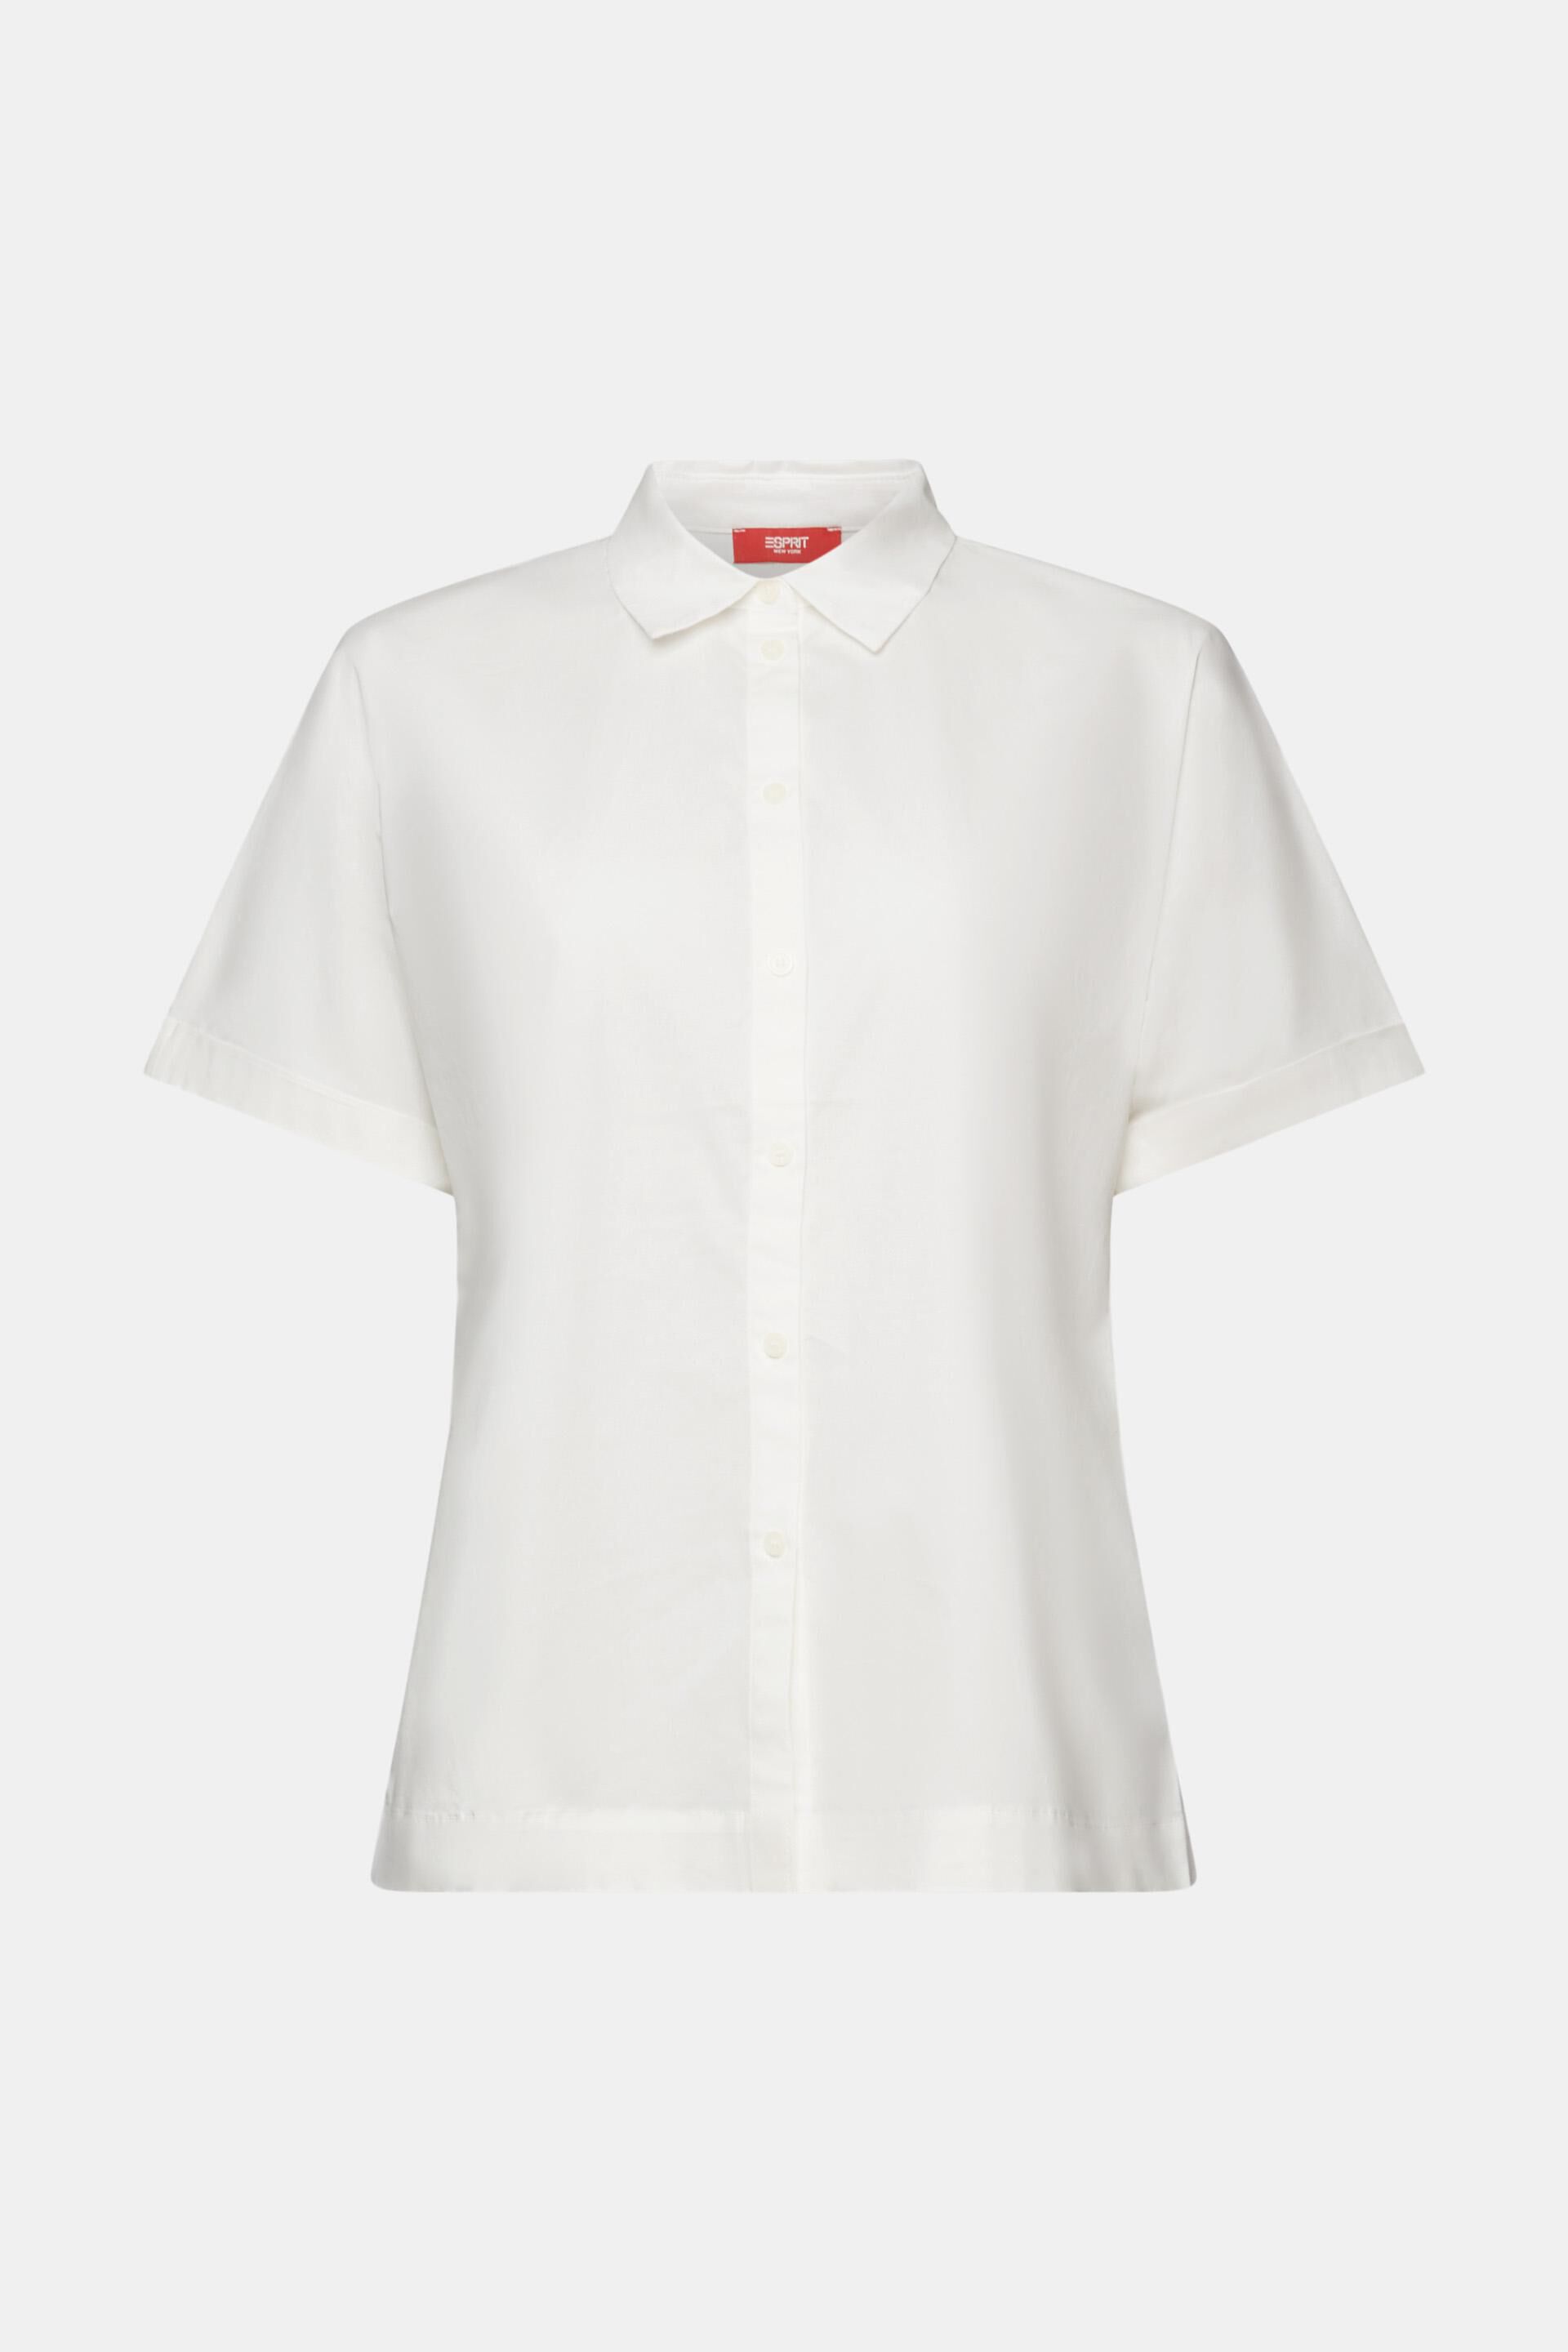 Esprit Kurzärmliges Hemd Baumwollpopeline aus